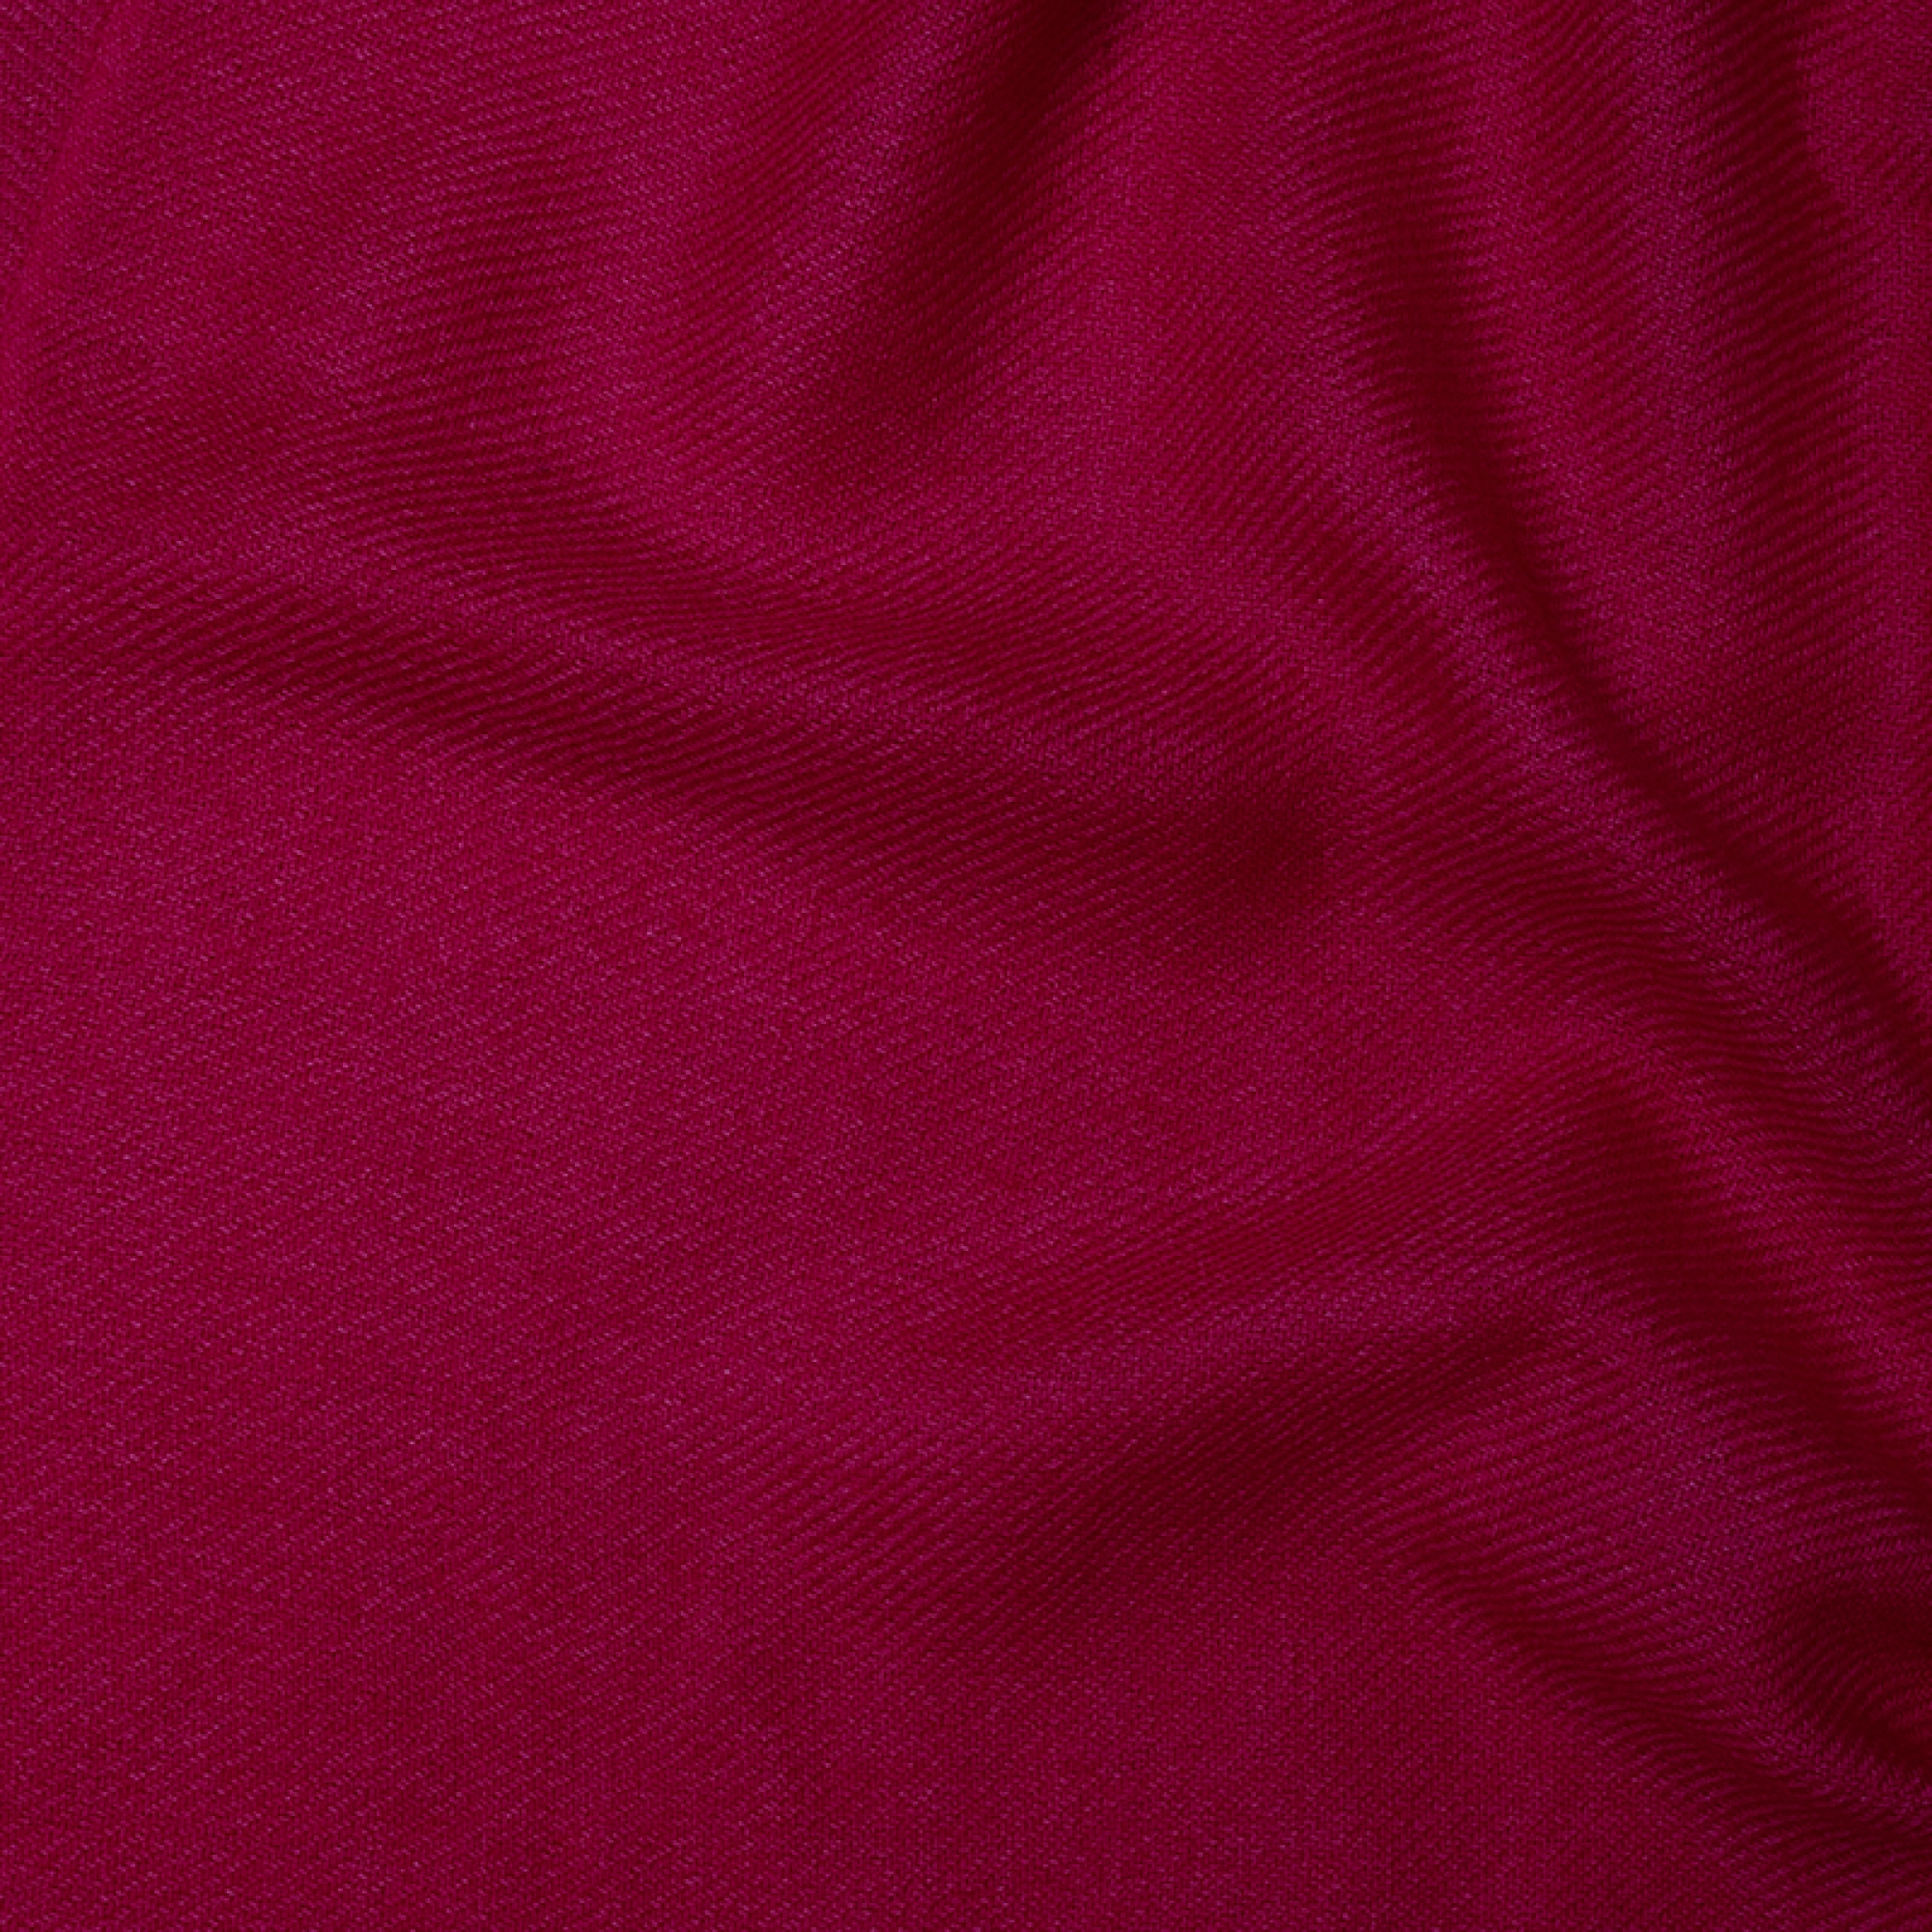 Cashmere accessories blanket frisbi 147 x 203 raspberry 147 x 203 cm